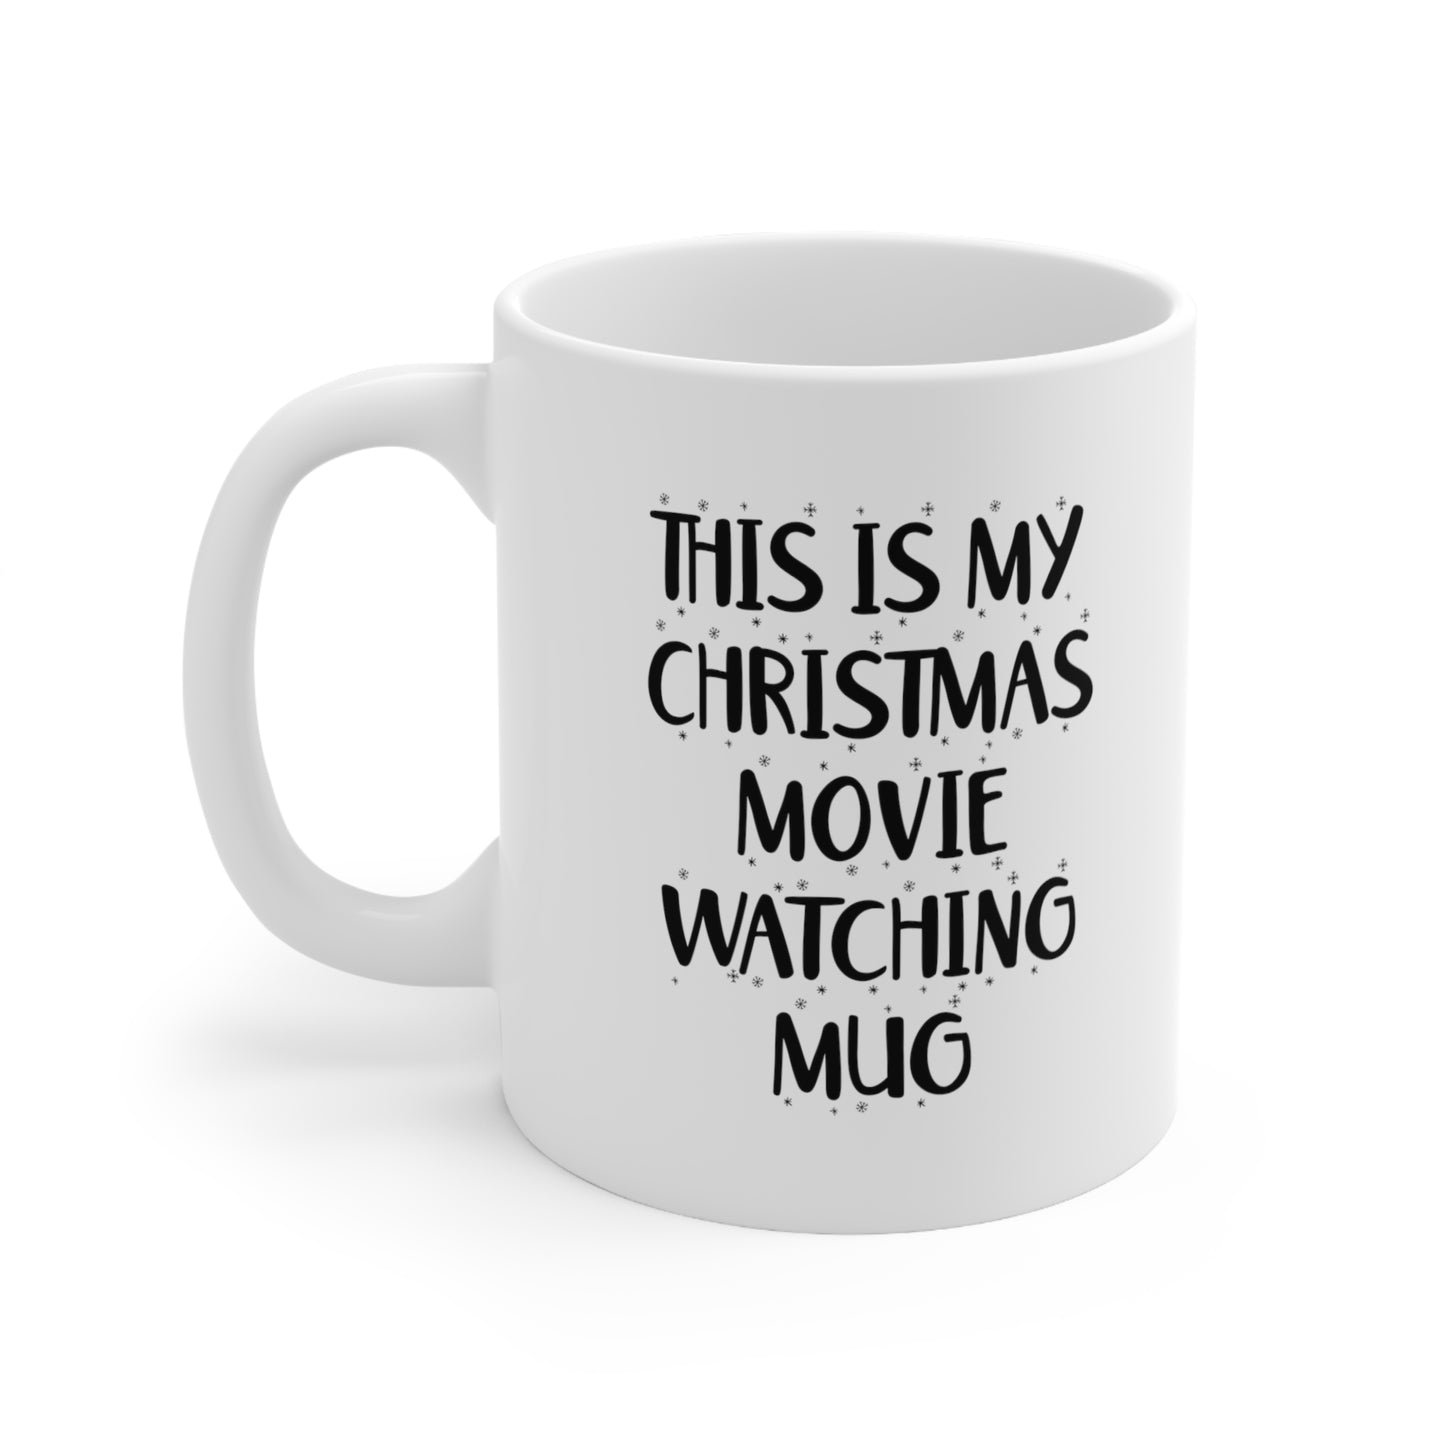 This is my christmas movie watching mug Coffee Mug